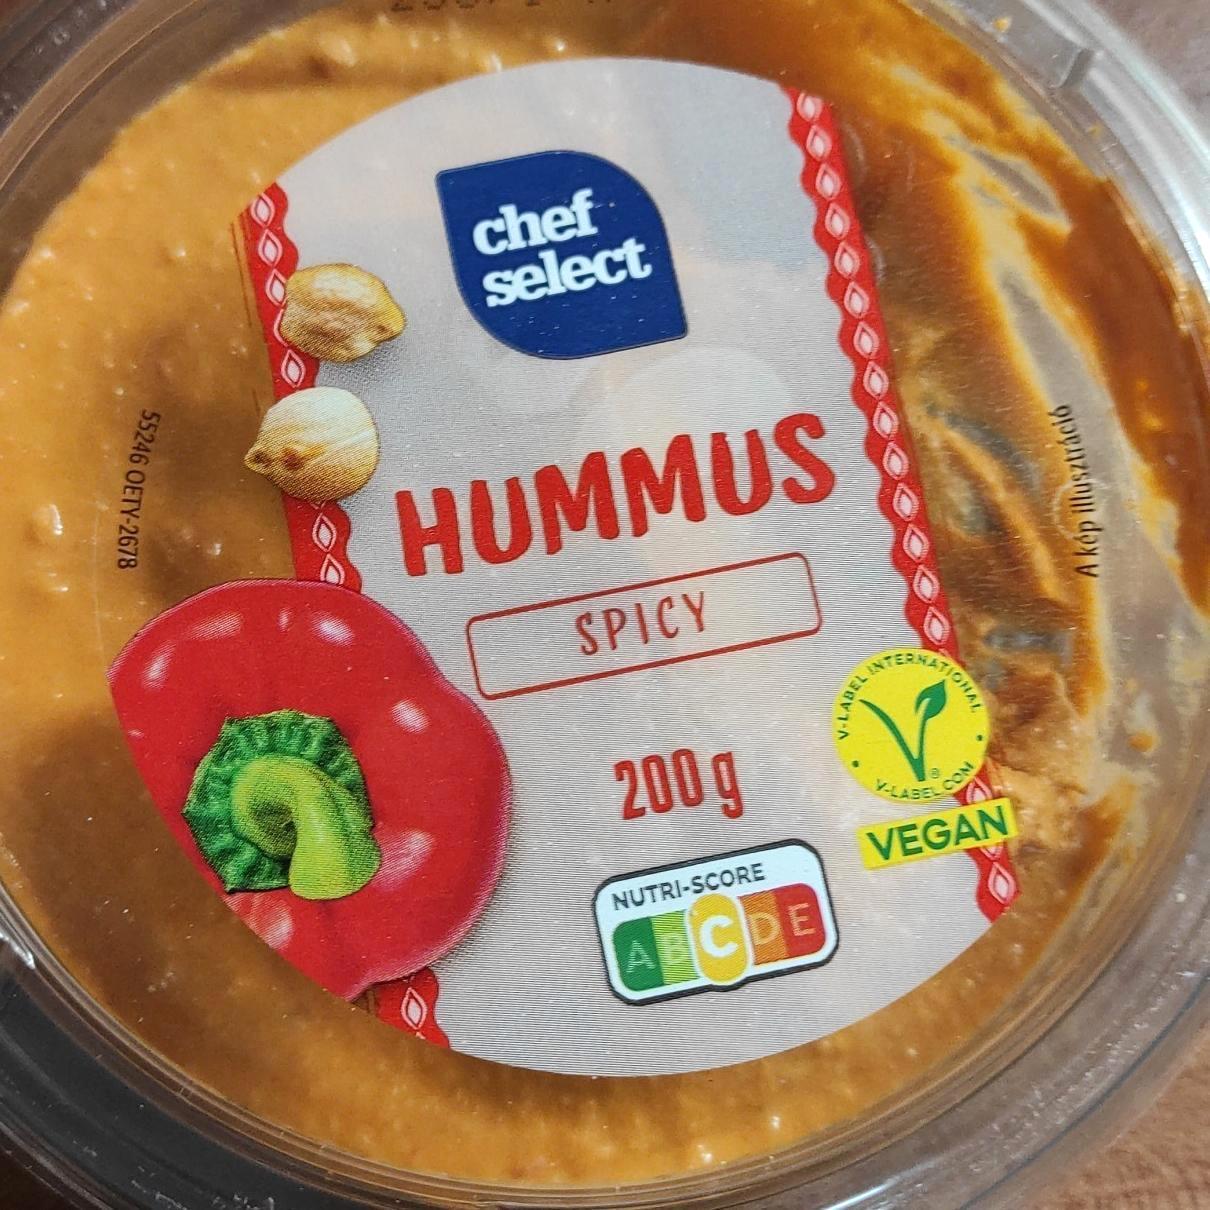 Képek - Hummusz spicy Chef select